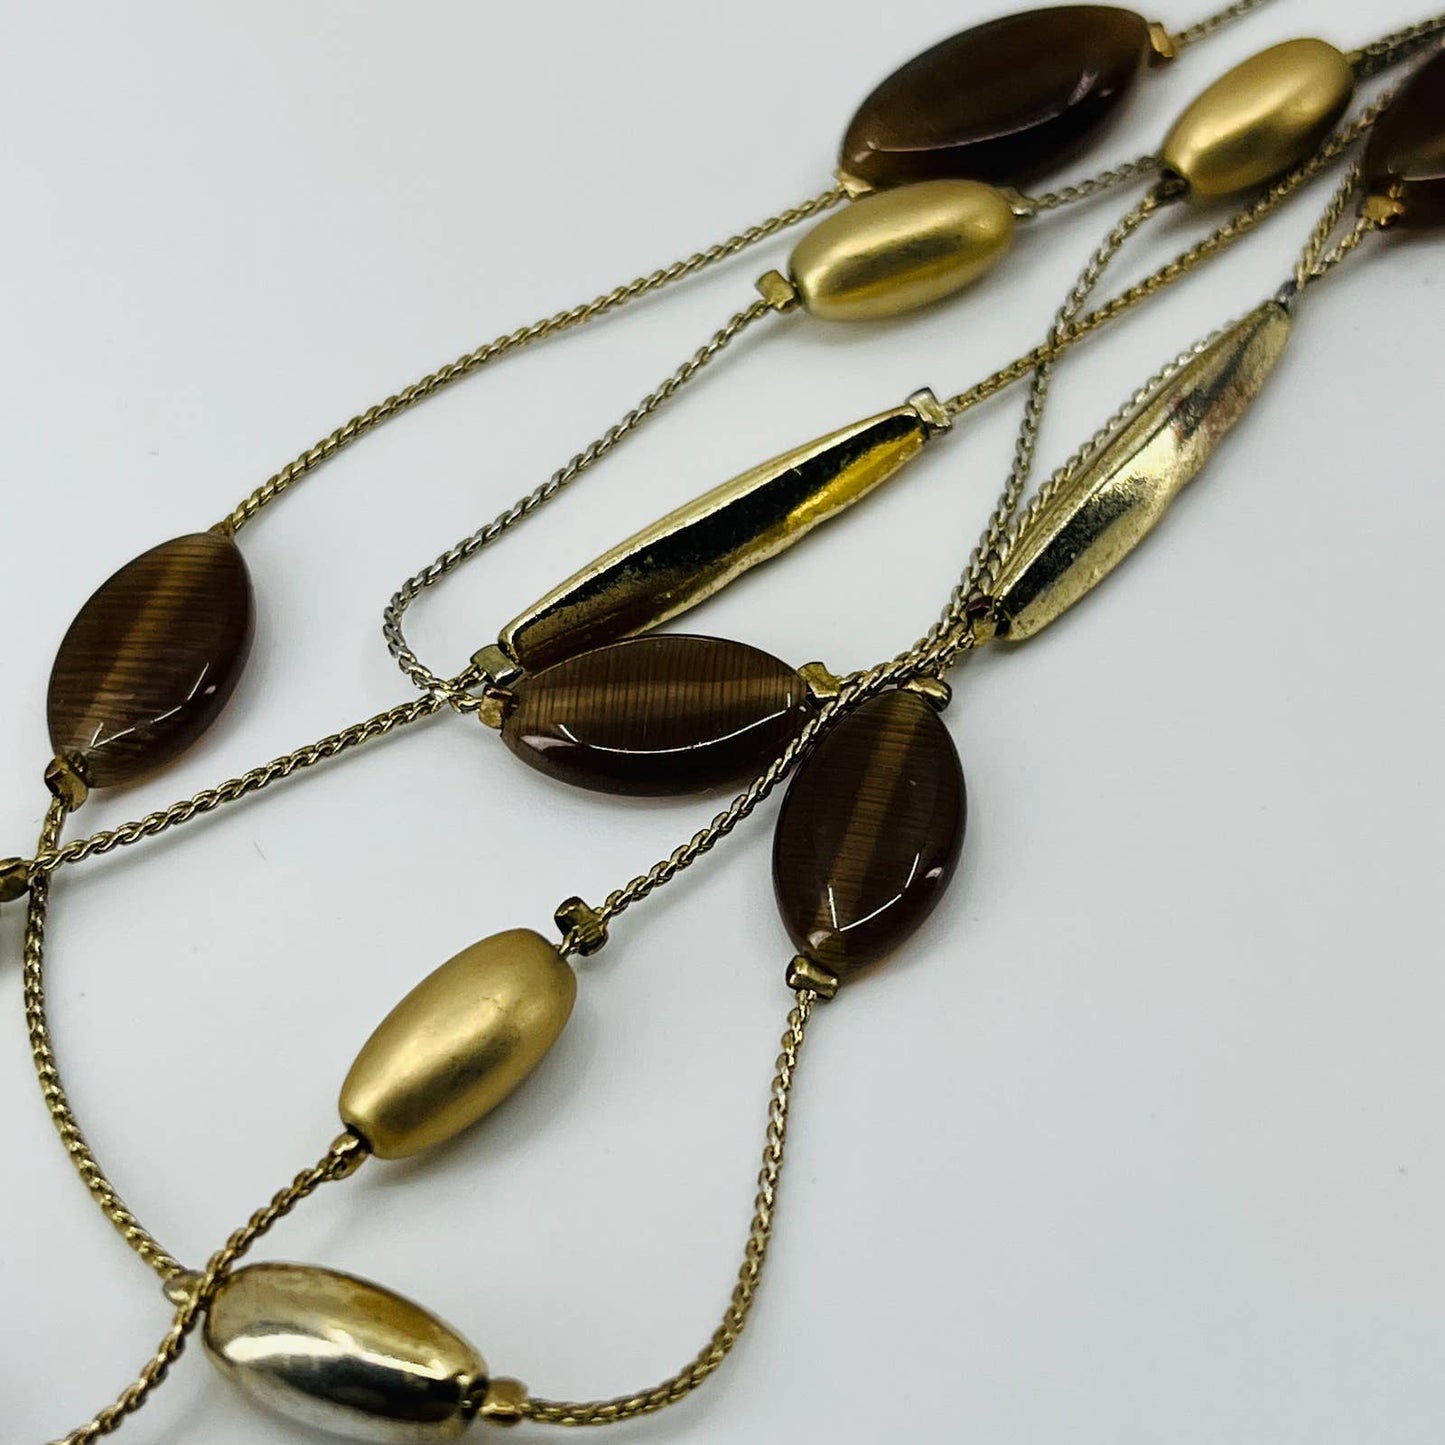 Vintage Mod Layered Necklace Gold Tone Brown Tiger Eye Beads SB2